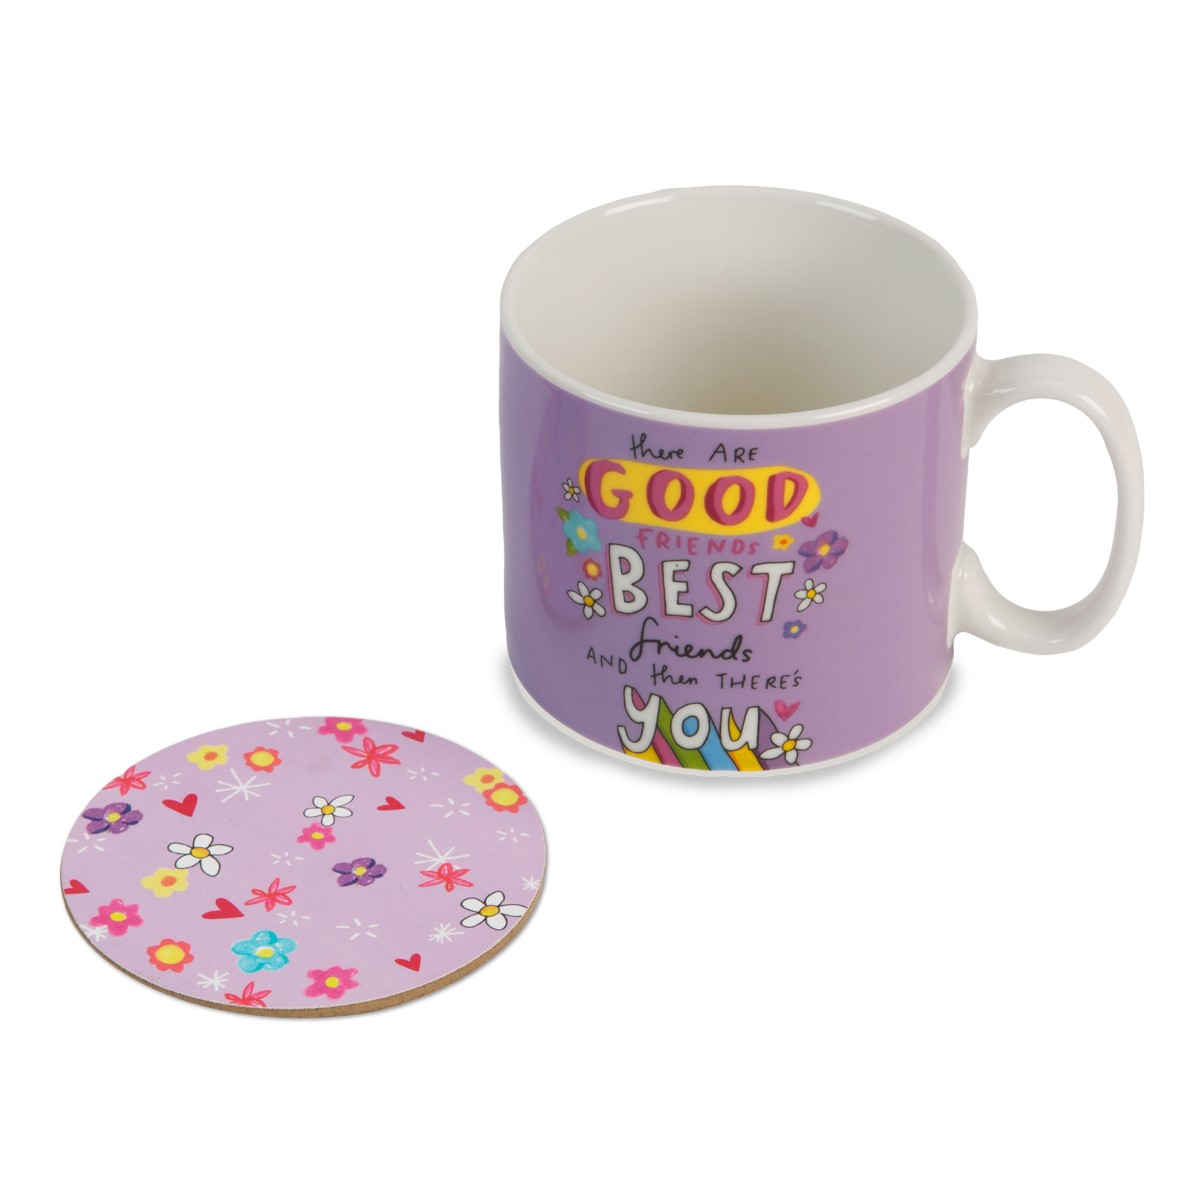 The Happy News Best Friend Mug & Coaster Set